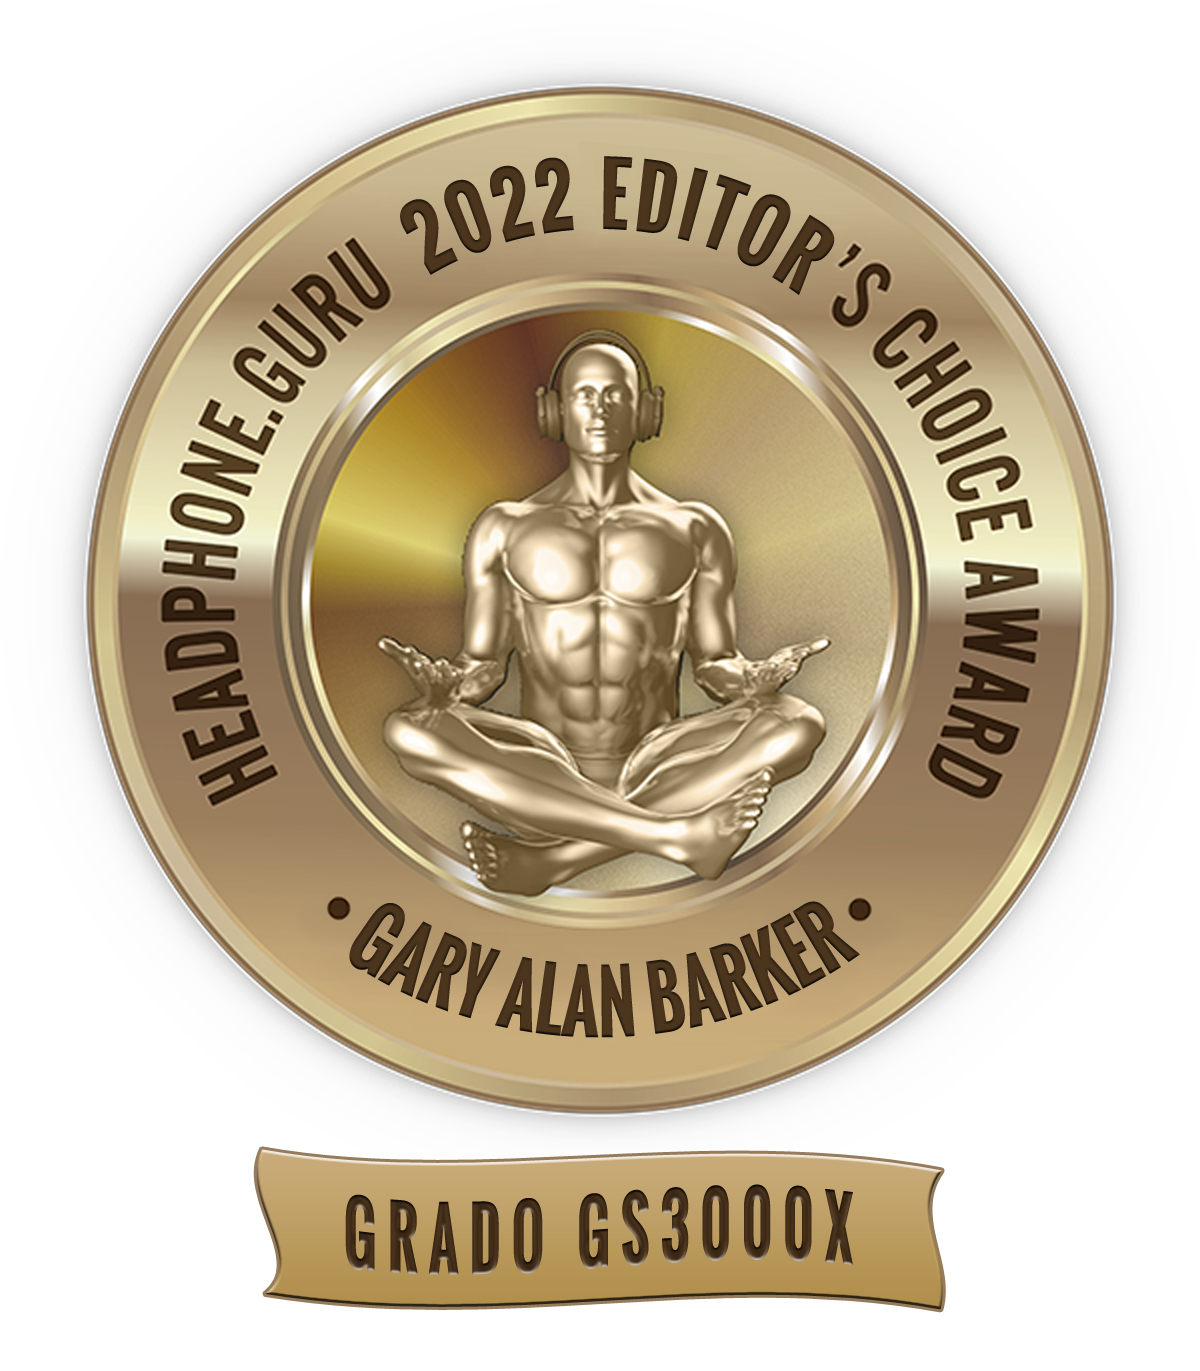 Editor’s Choice Award for 2022 - Grado GS3000X Headphones